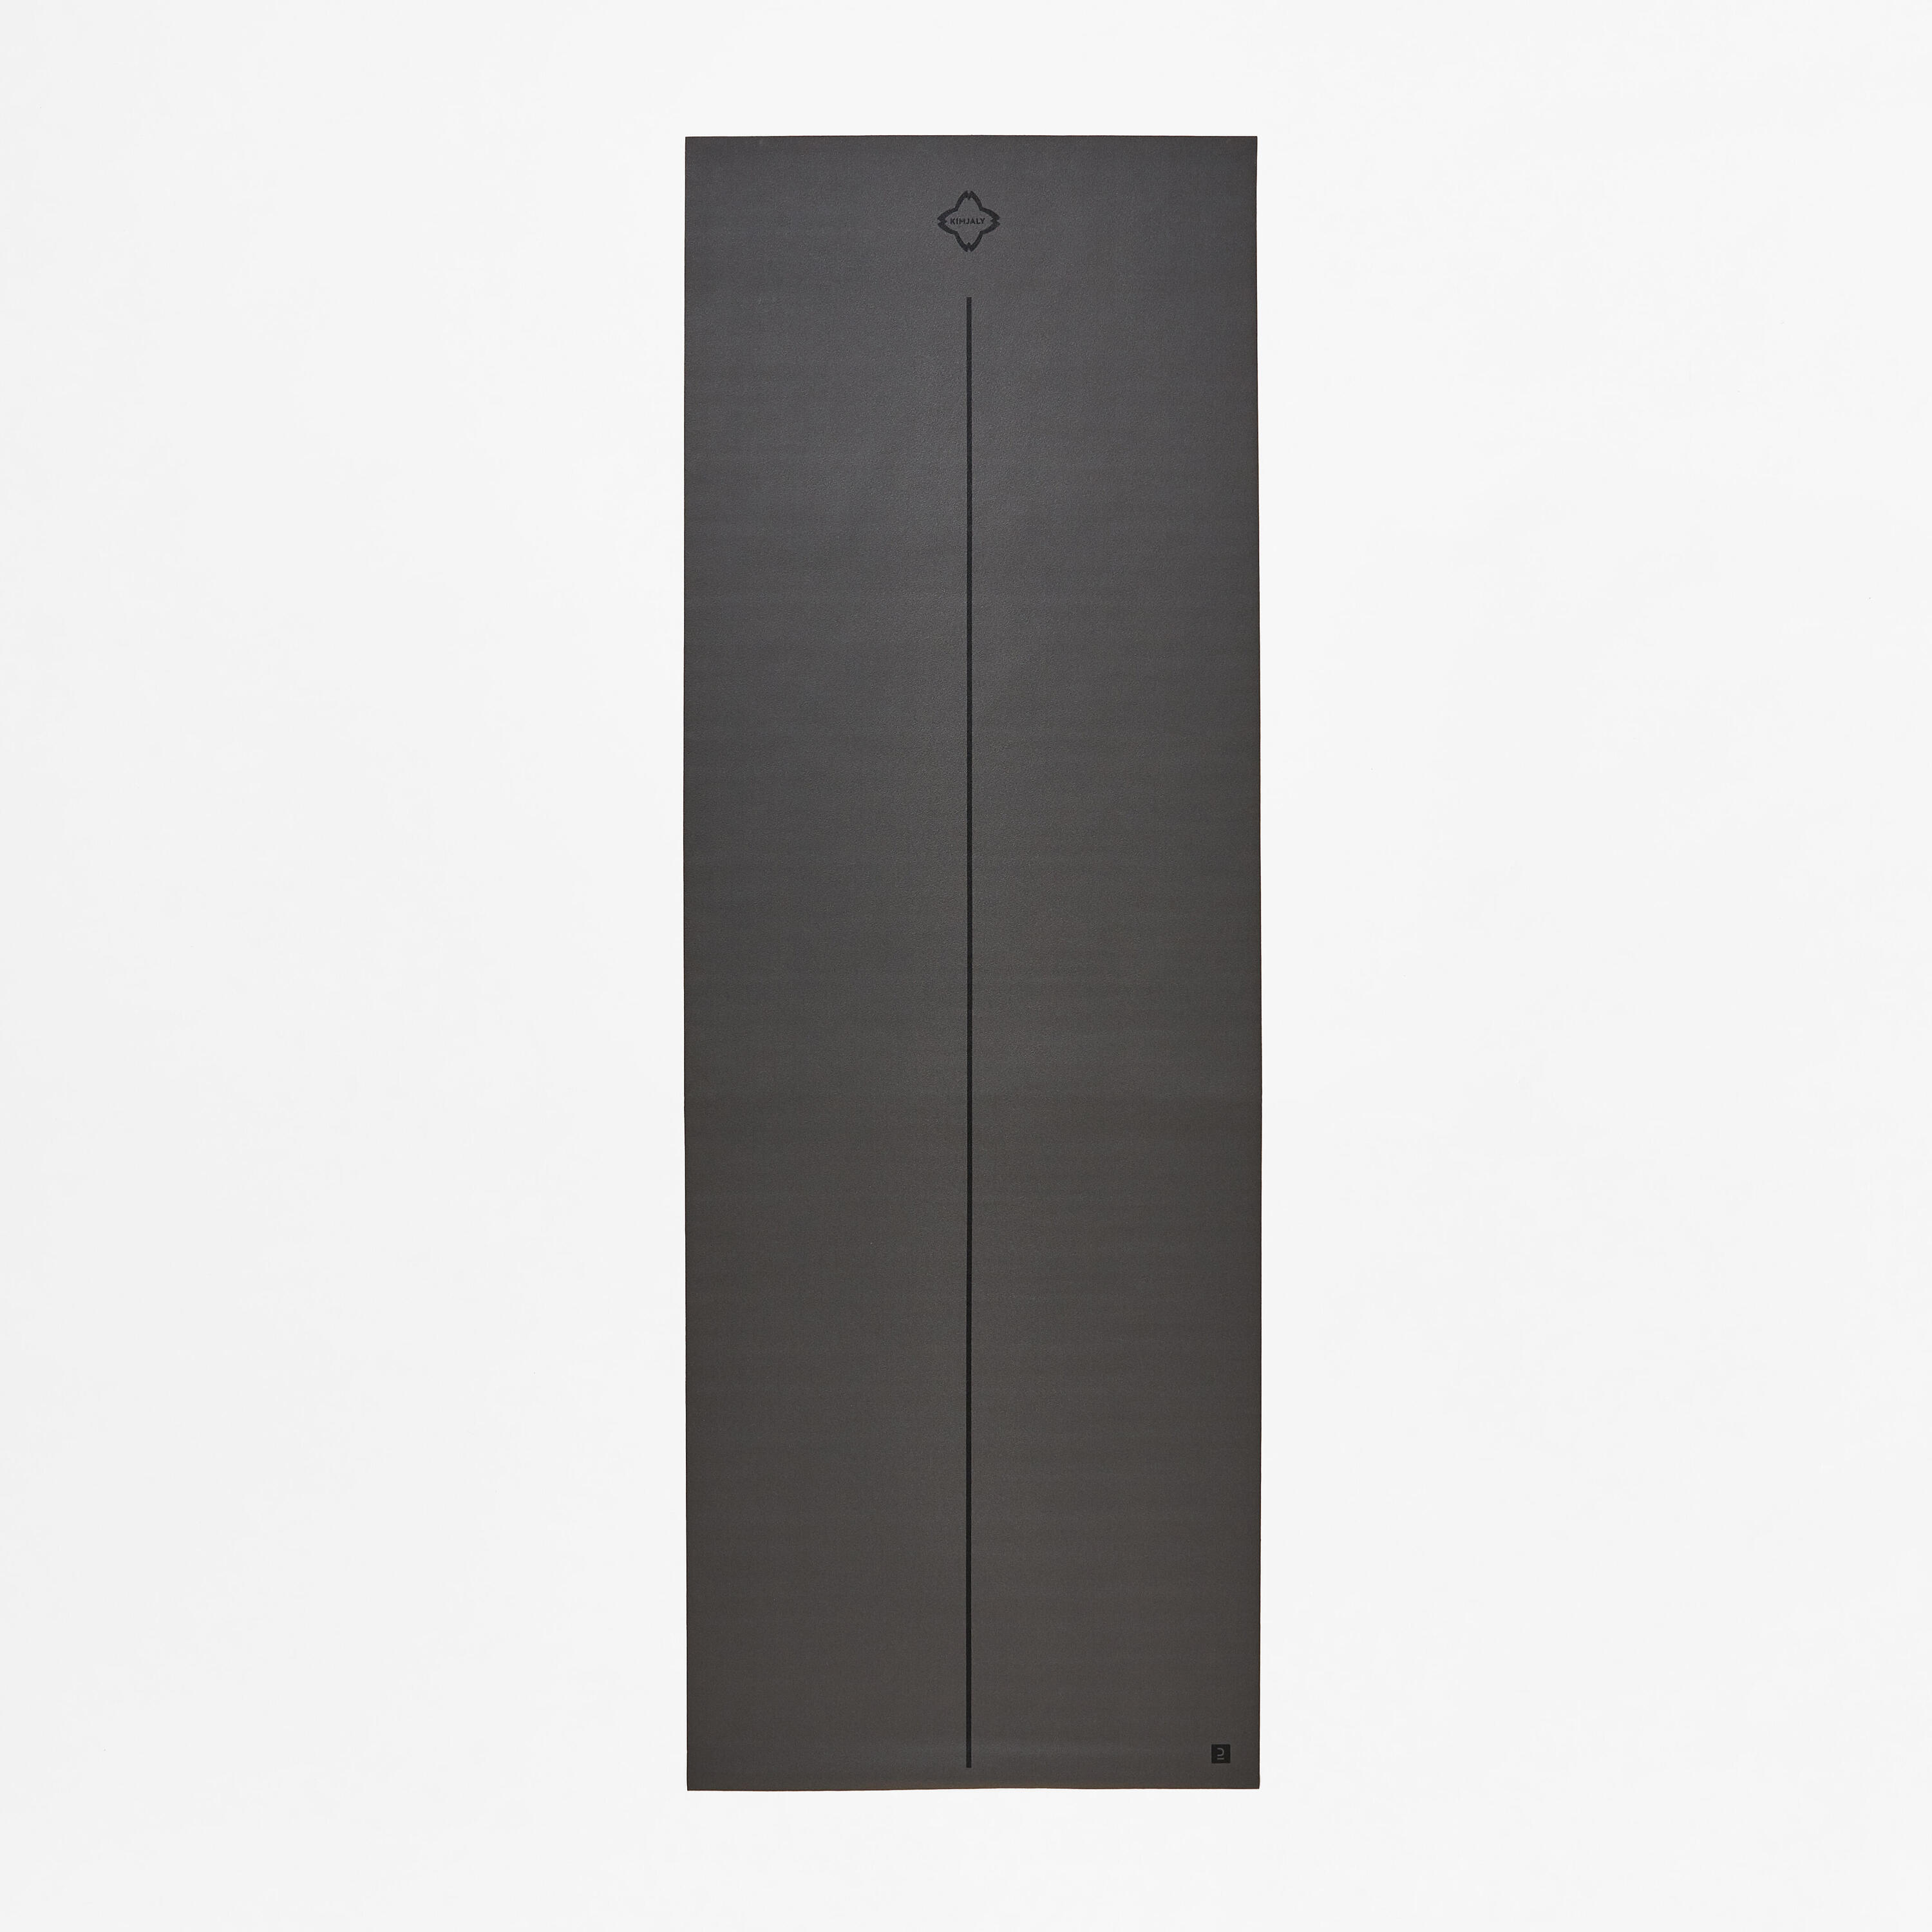 KIMJALY Foldable Travel Yoga Mat / Mat Cover 180 cm ⨯ 62 cm ⨯ 1.33 mm - Grey